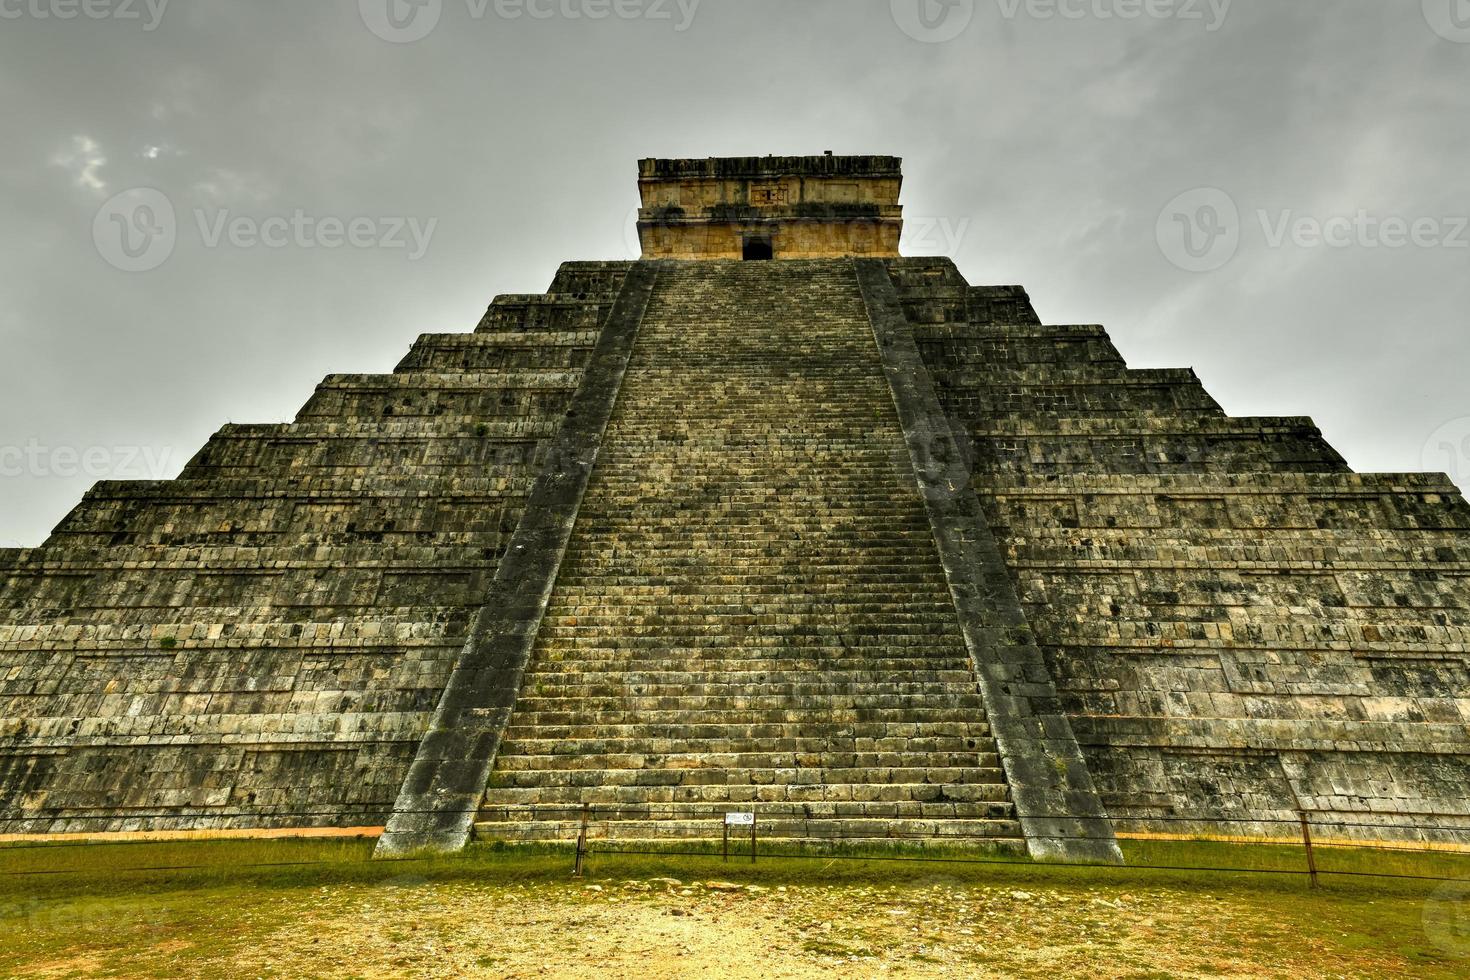 pirâmide de kukulkan em chichen itza, a antiga cidade maia na região de yucatan, no méxico. foto